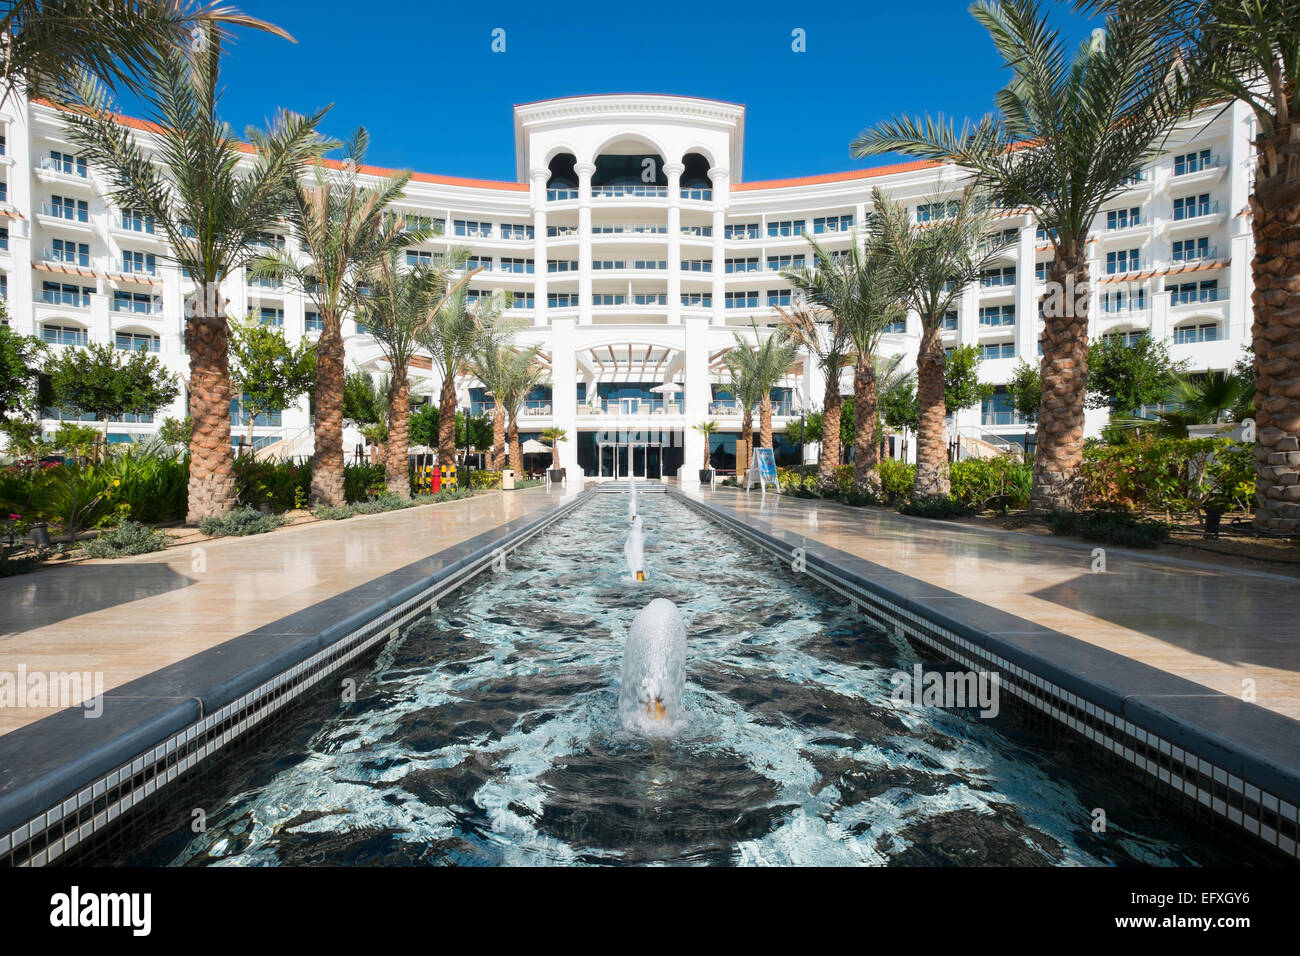 Waldorf Astoria Hotel on The Palm Jumeirah Island in Dubai United Arab Emirates Stock Photo